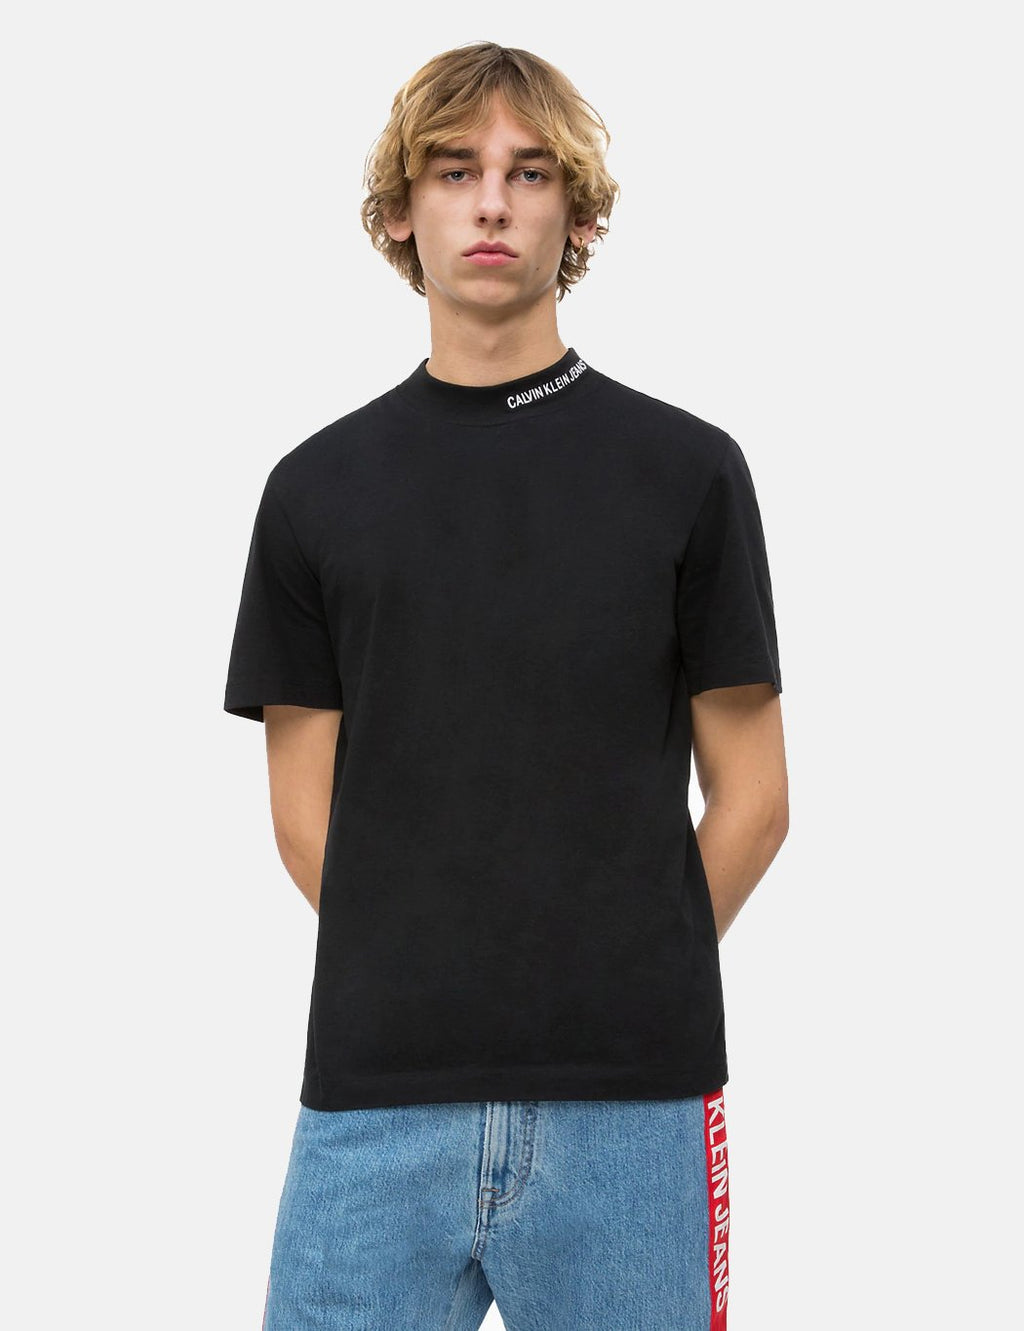 Calvin Klein – URBAN T-Shirt EXCESS. | Crew USA Black Neck Embroidered URBAN EXCESS 